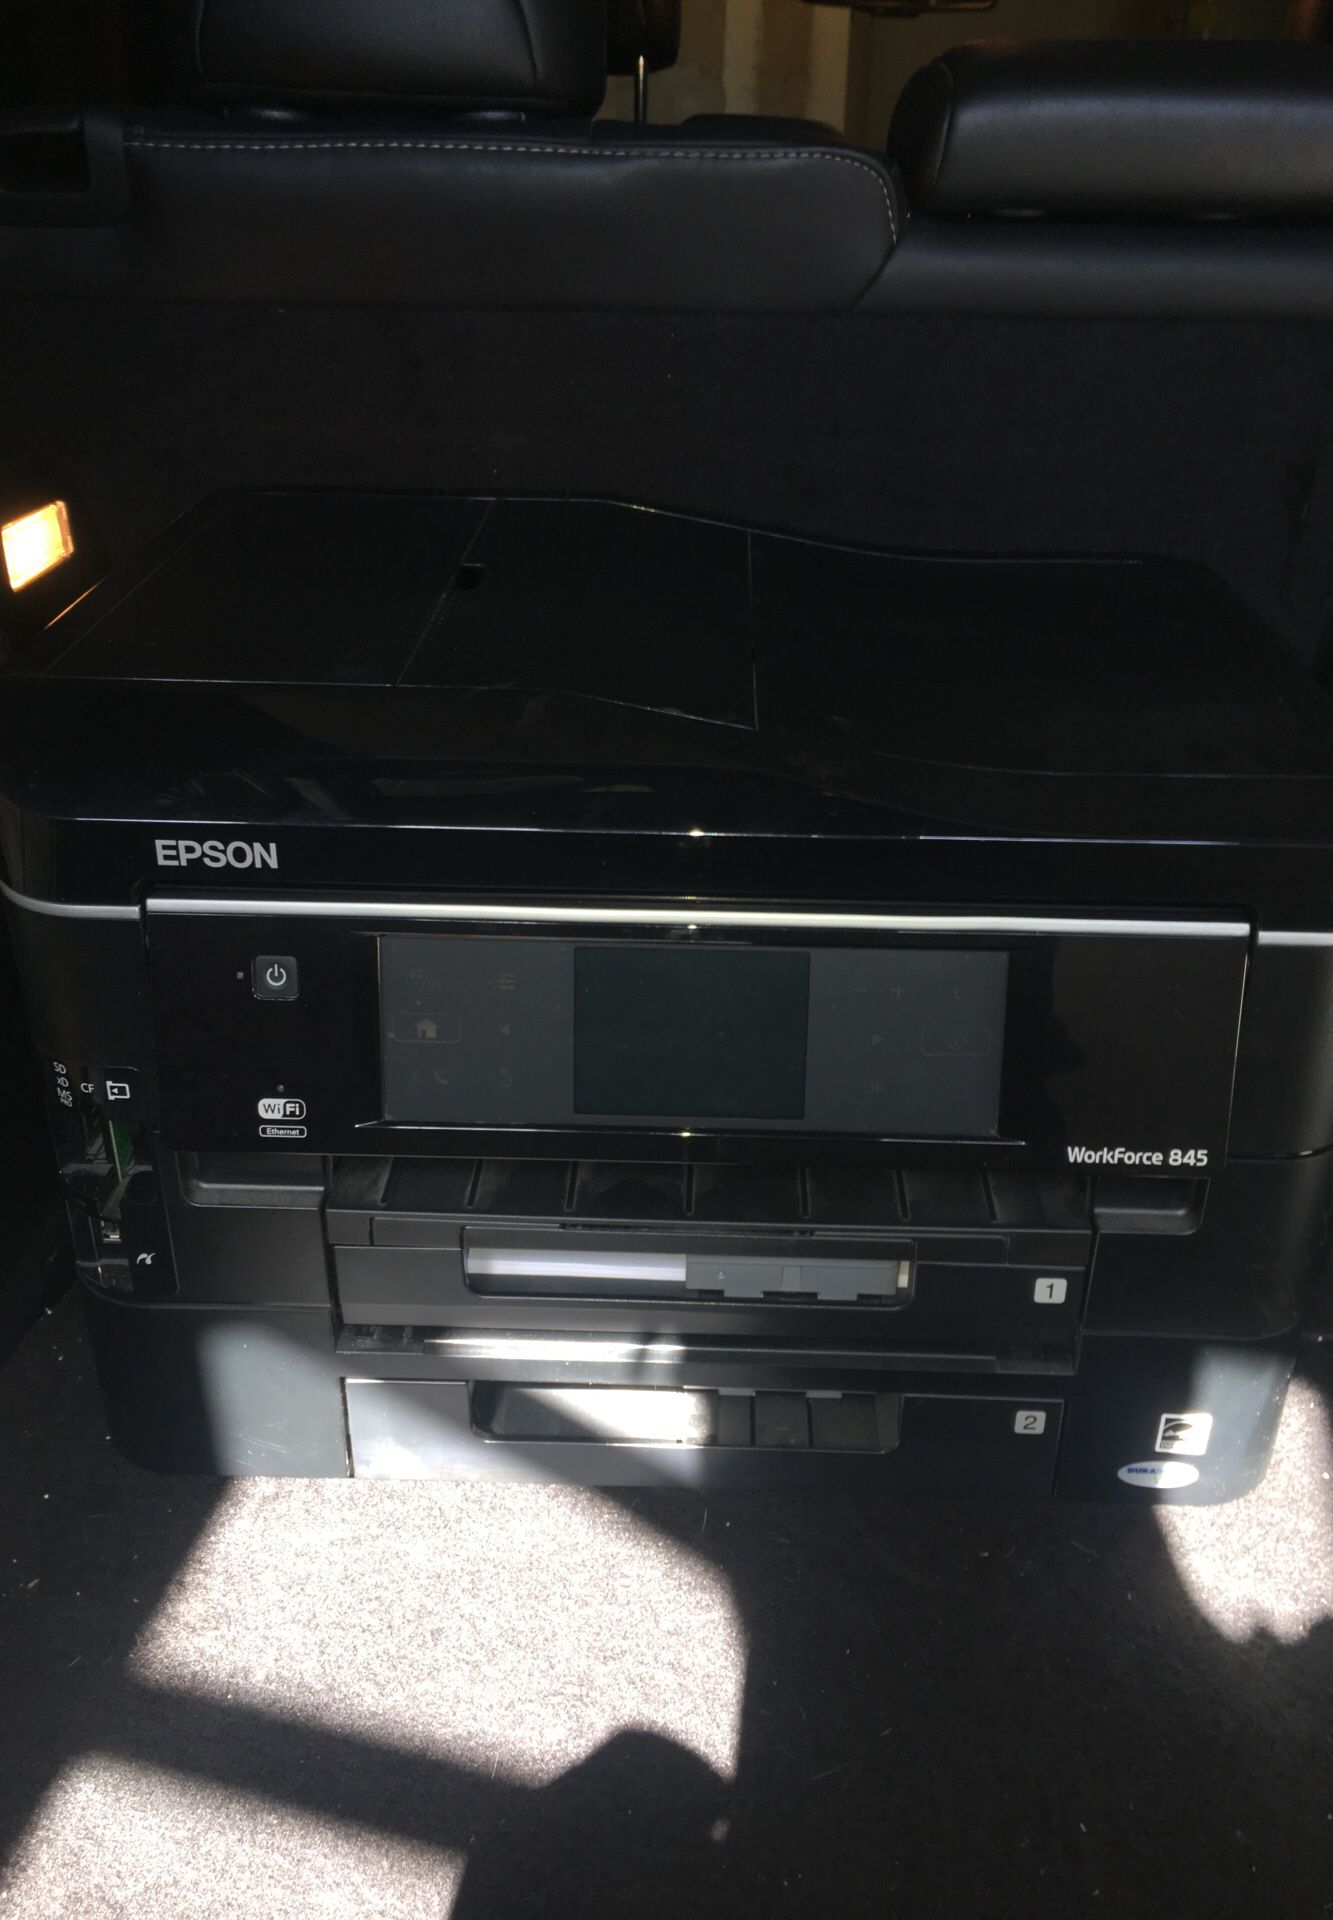 Epson workforce 845 printer